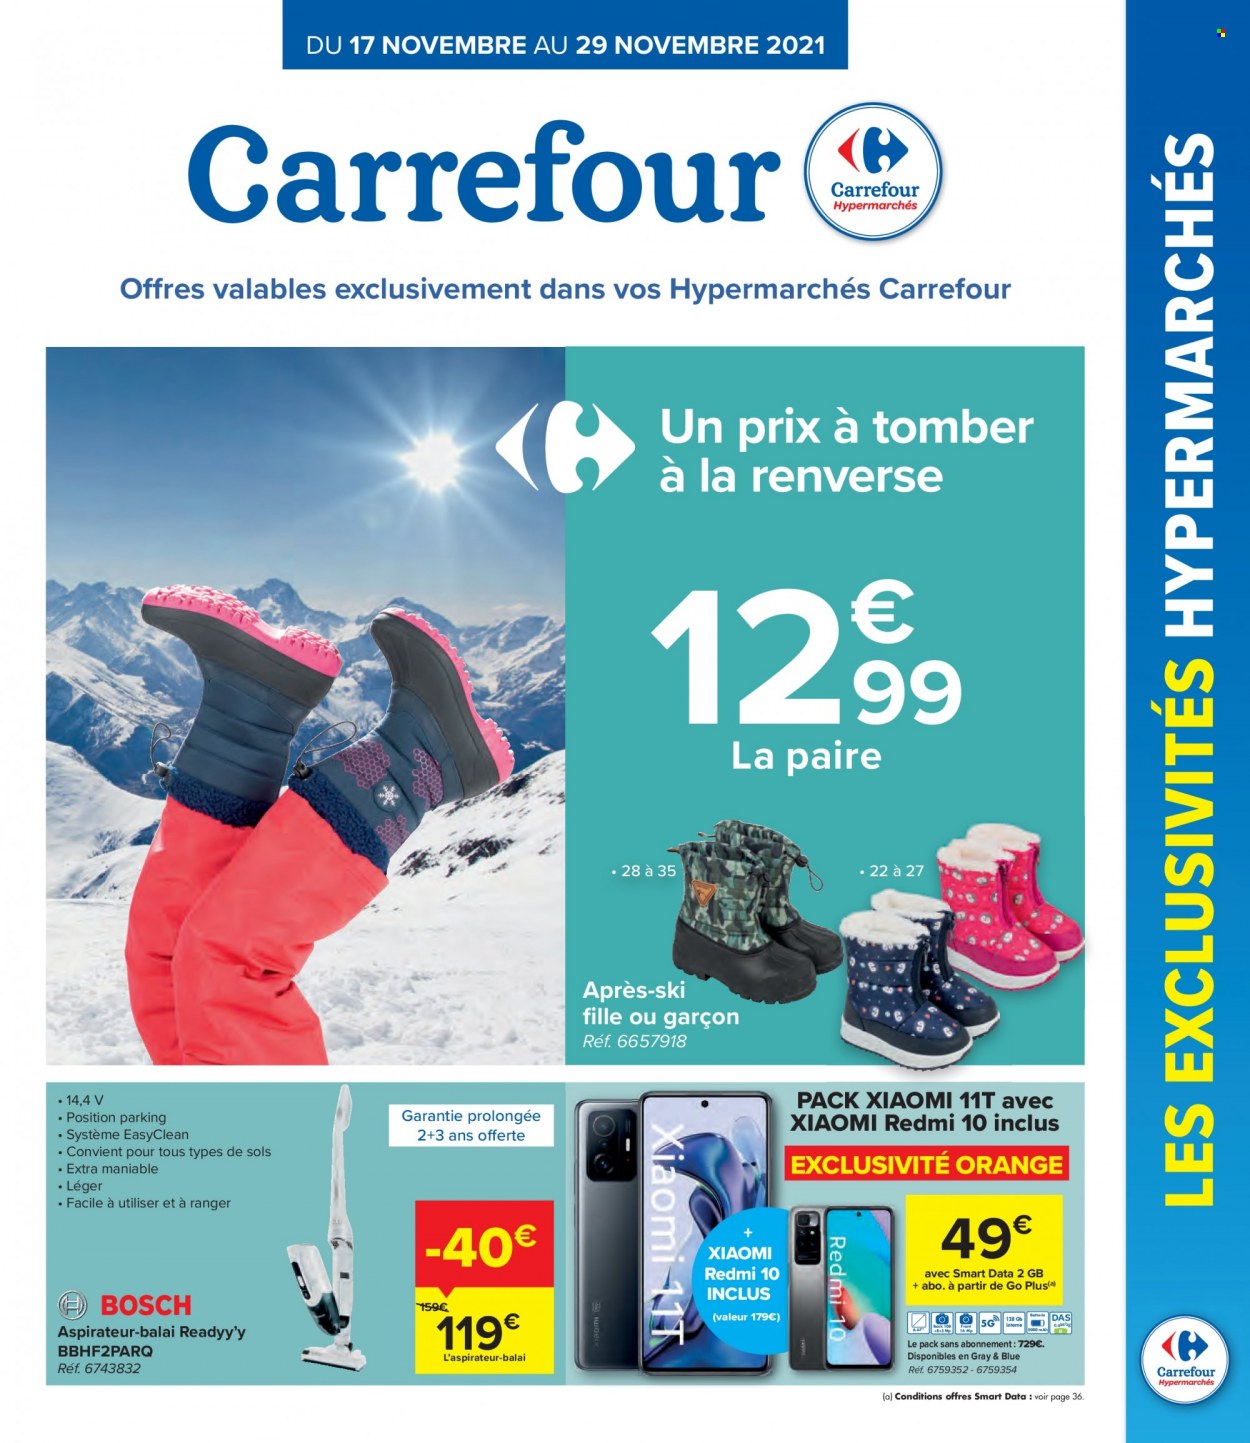 thumbnail - Catalogue Carrefour hypermarkt - 17/11/2021 - 29/11/2021 - Produits soldés - balai, Xiaomi, aspirateur, ski. Page 1.